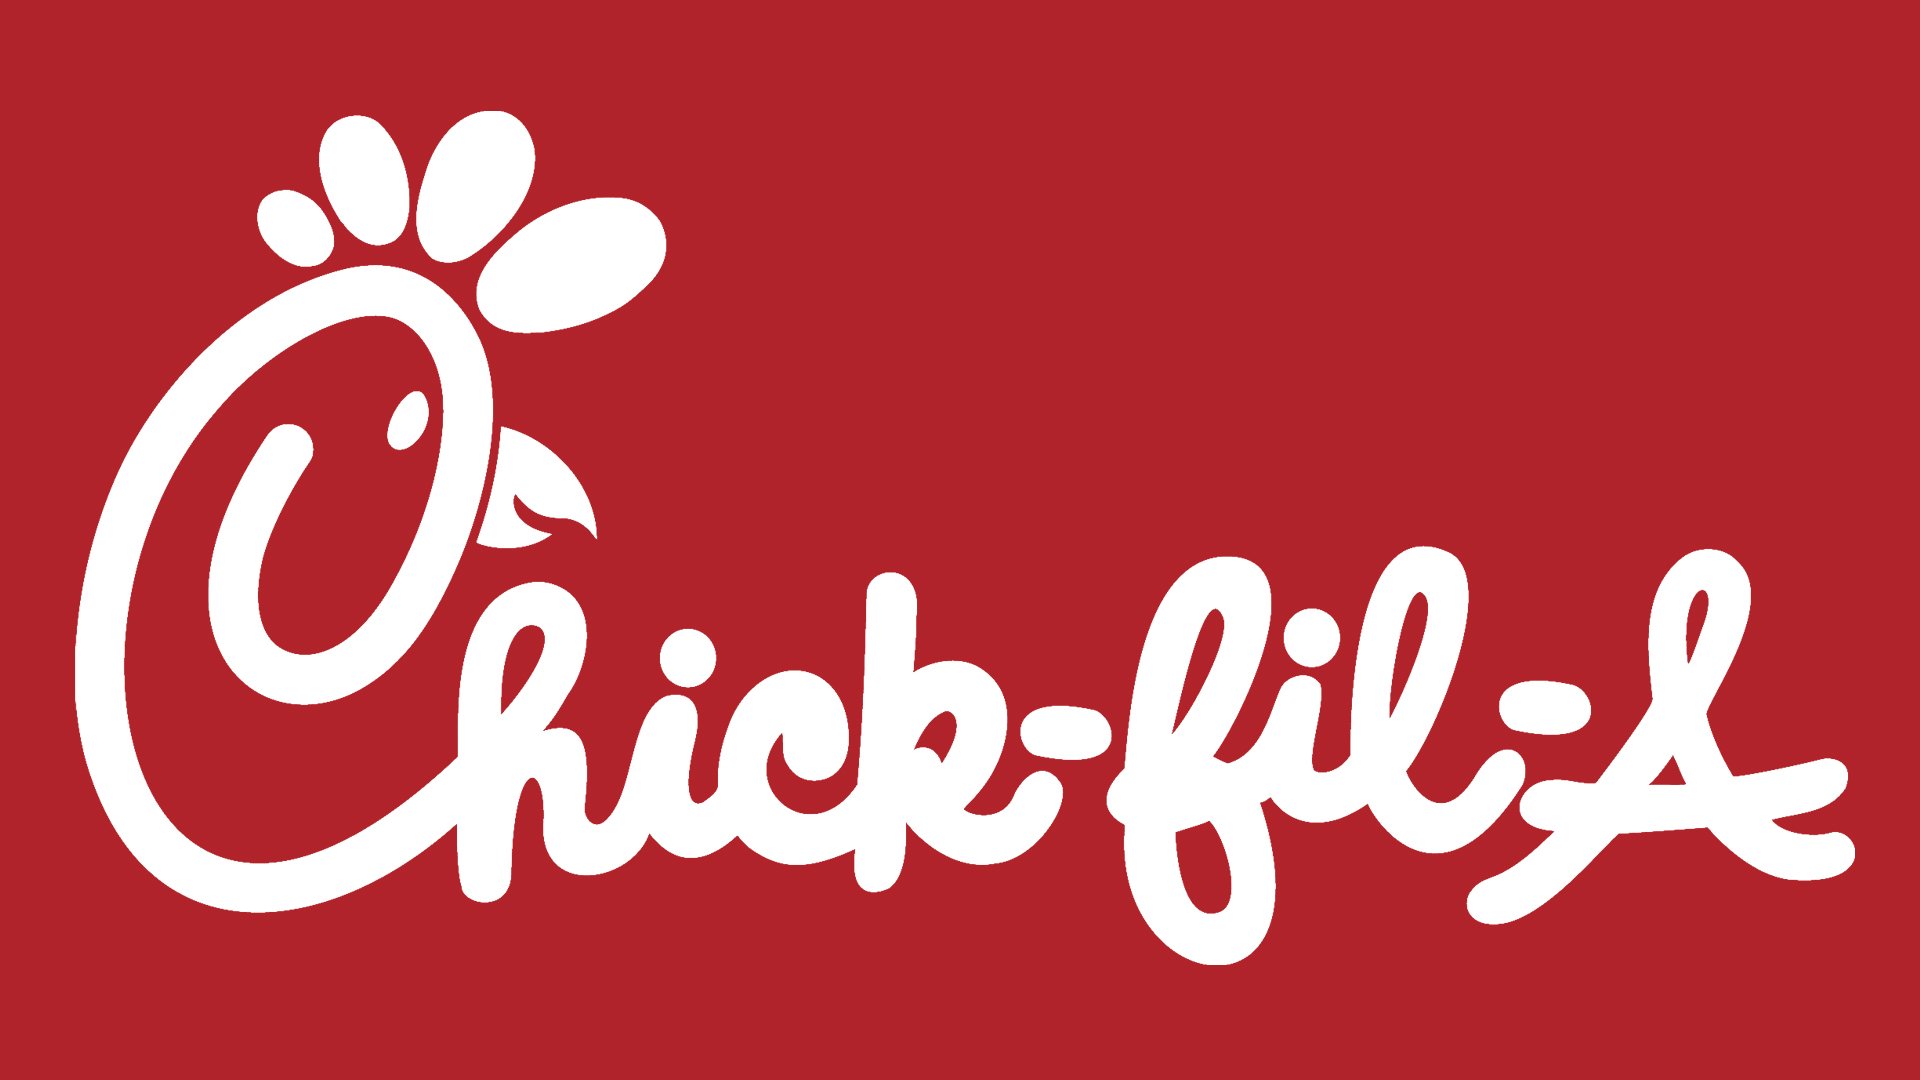 logo chick fil - Chickfill